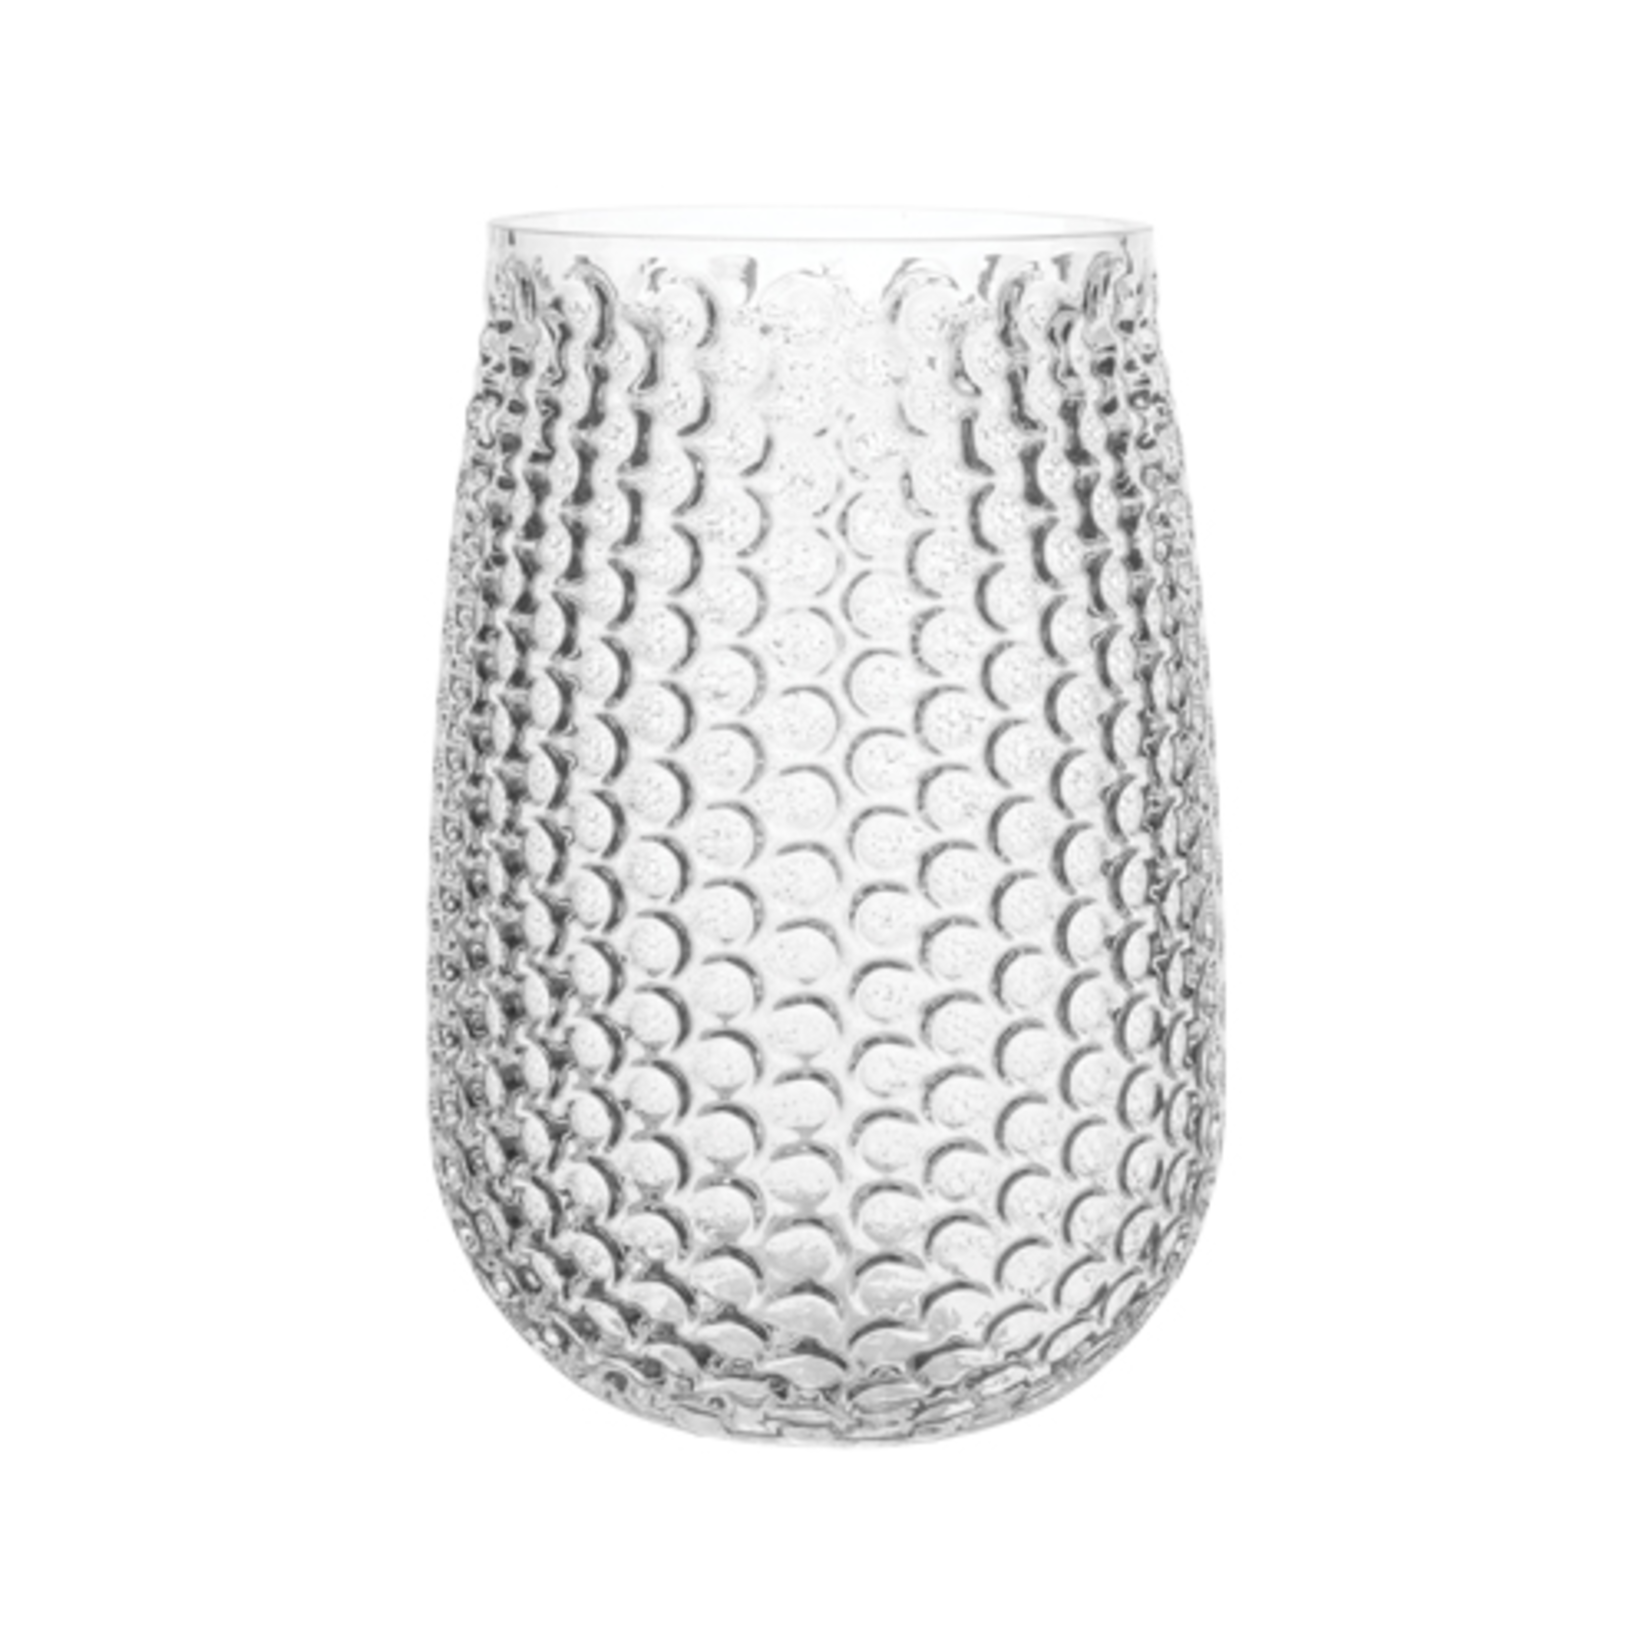 7 5/8"h x 4.25" Pebble Stone Vase - Crystal